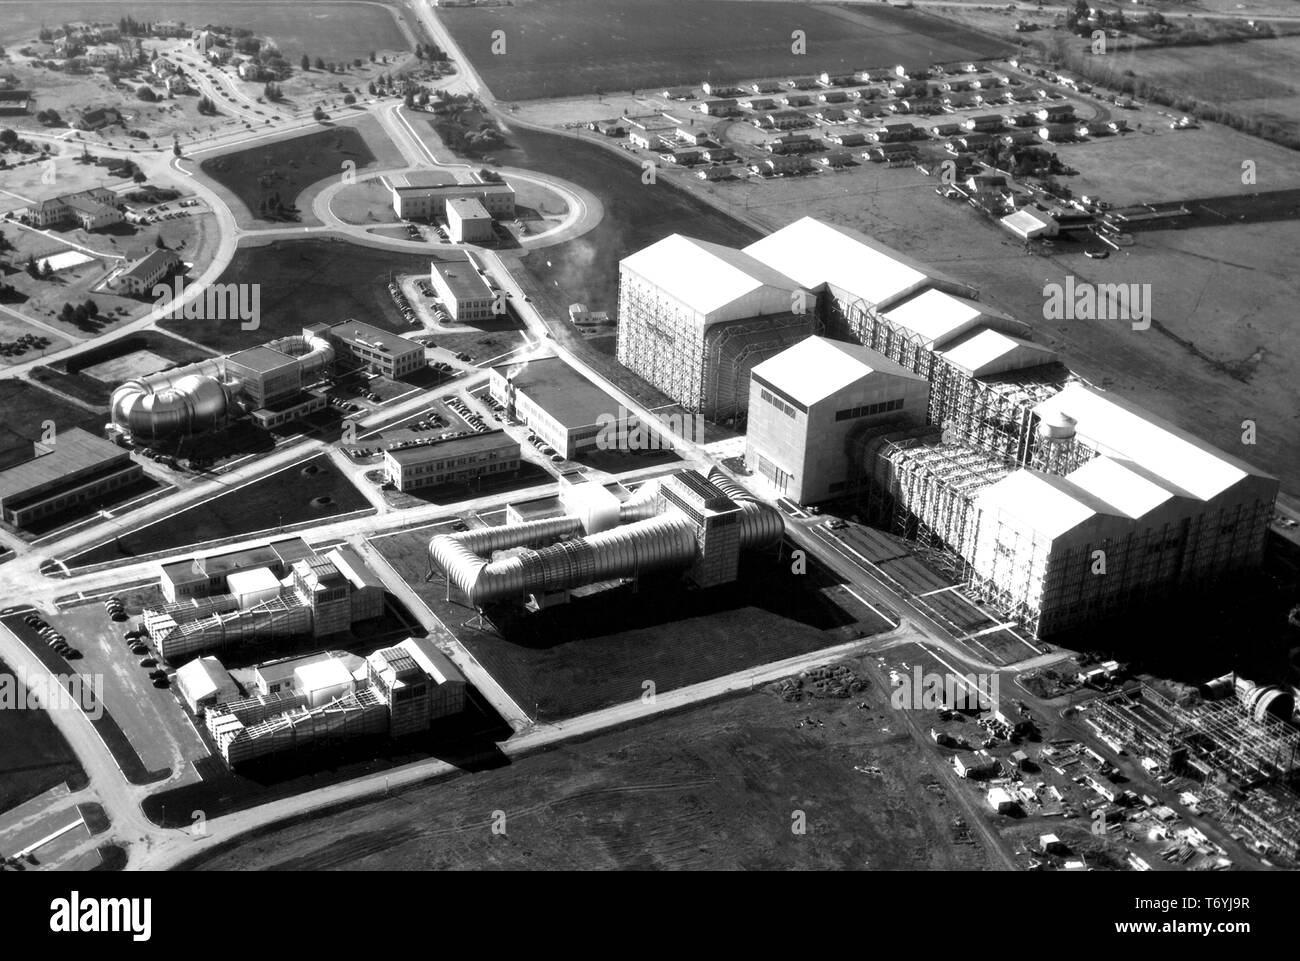 Aerial photograph of the National Advisory Committee for Aeronautics (NACA) Ames Aeronautical Laboratory at Moffett Field, California, February 11, 1947. Image courtesy National Aeronautics and Space Administration (NASA). () Stock Photo